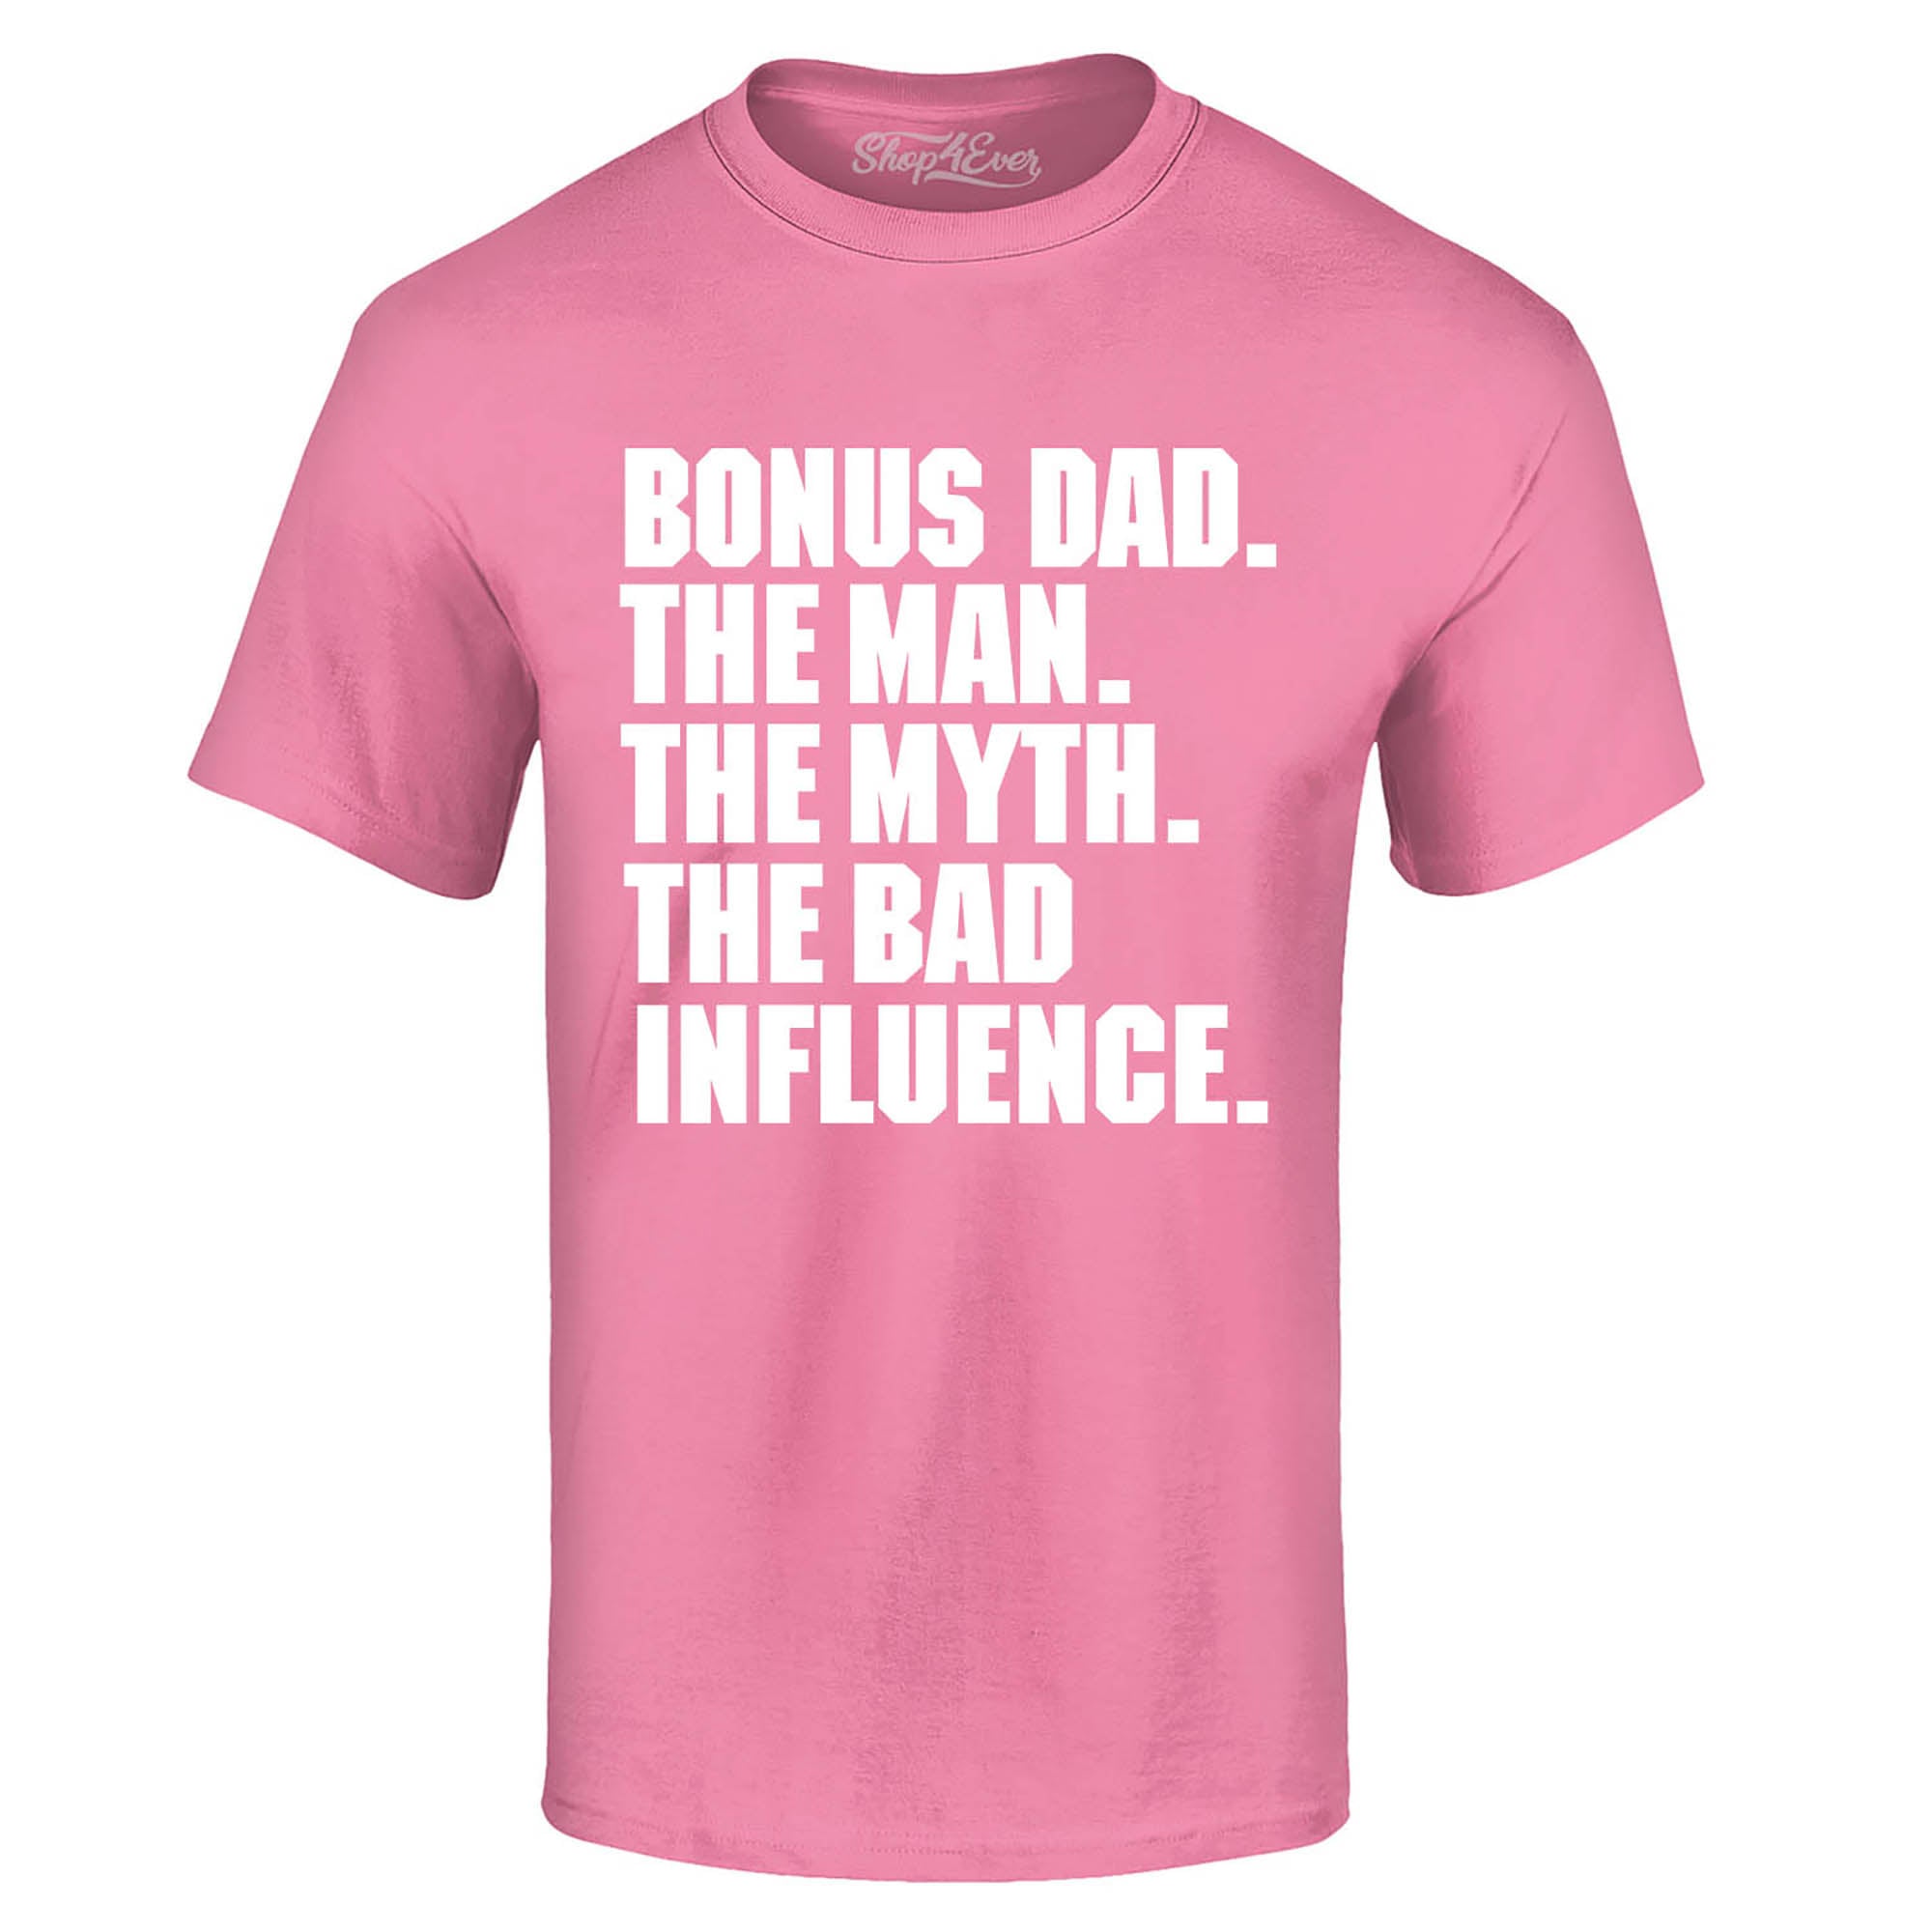 Bonus Dad The Man The Myth The Bad Influence T-Shirt